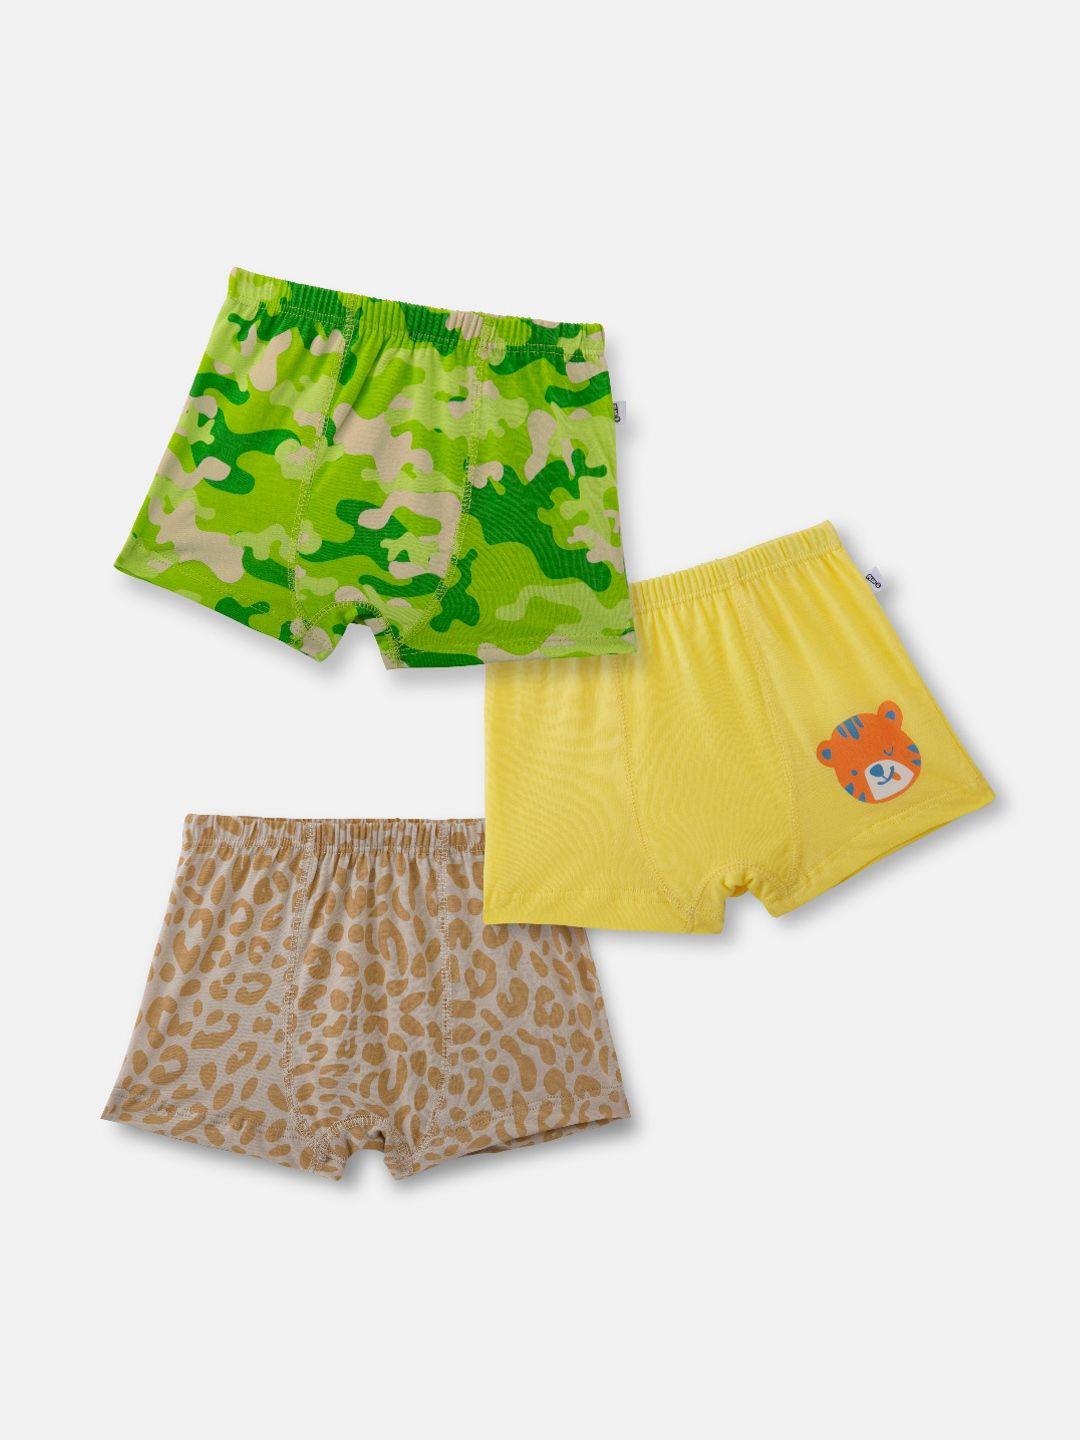 you-got-plan-b-boys-pack-of-3-multicolored-printed-cotton-anti-microbial-boxers-bb-safari